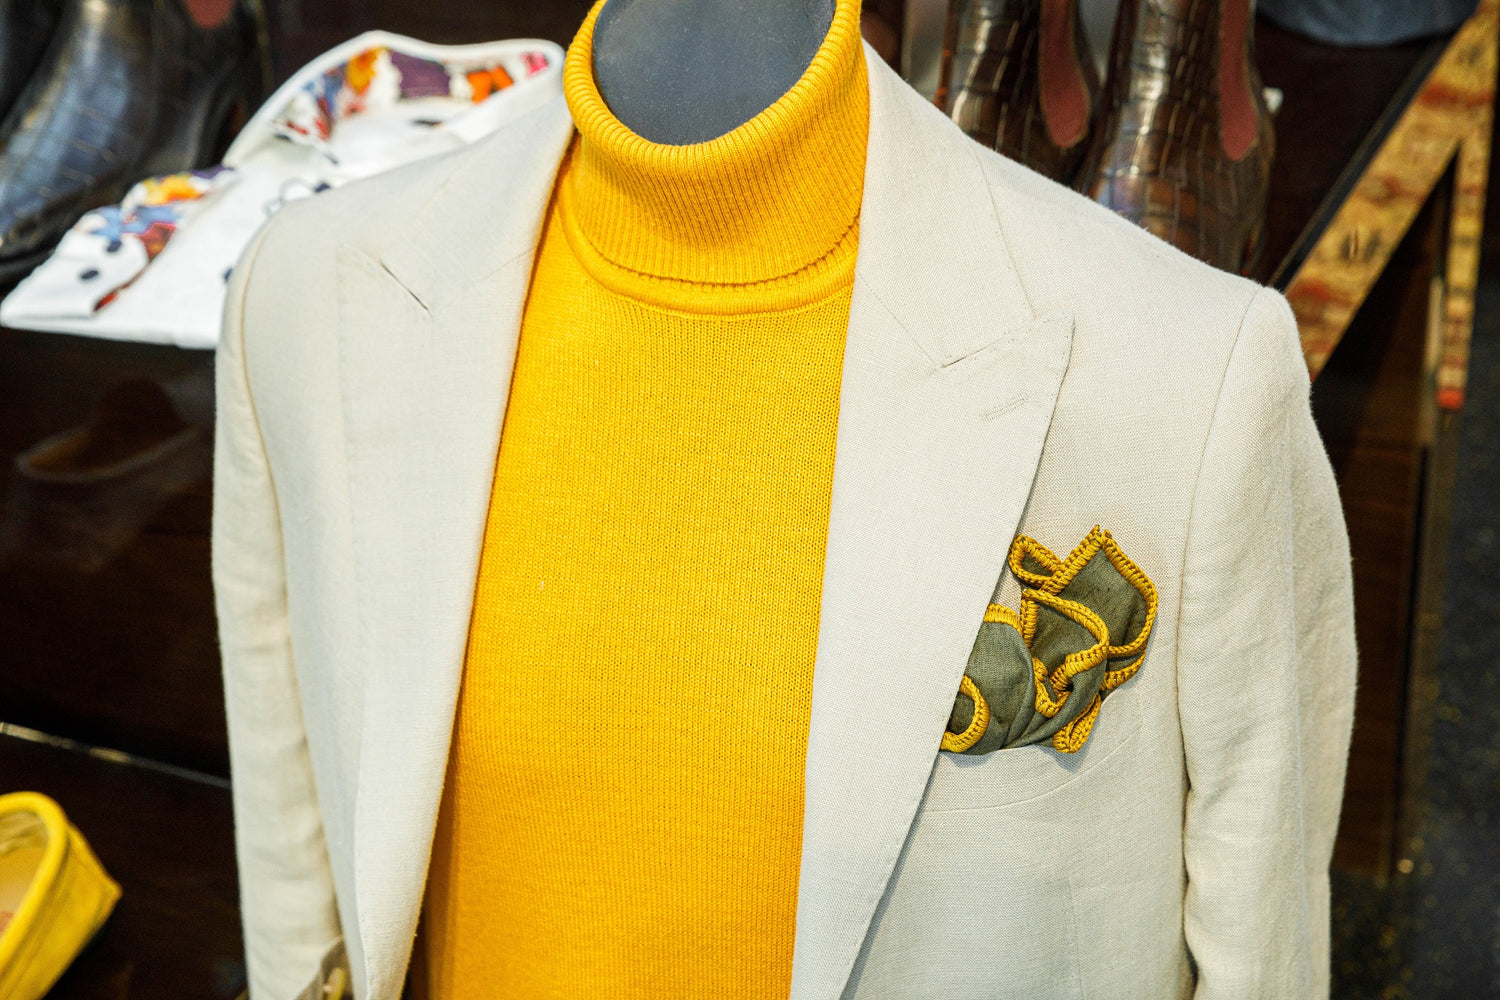 Yellow Turtleneck Sweater - Sweater by Urbbana